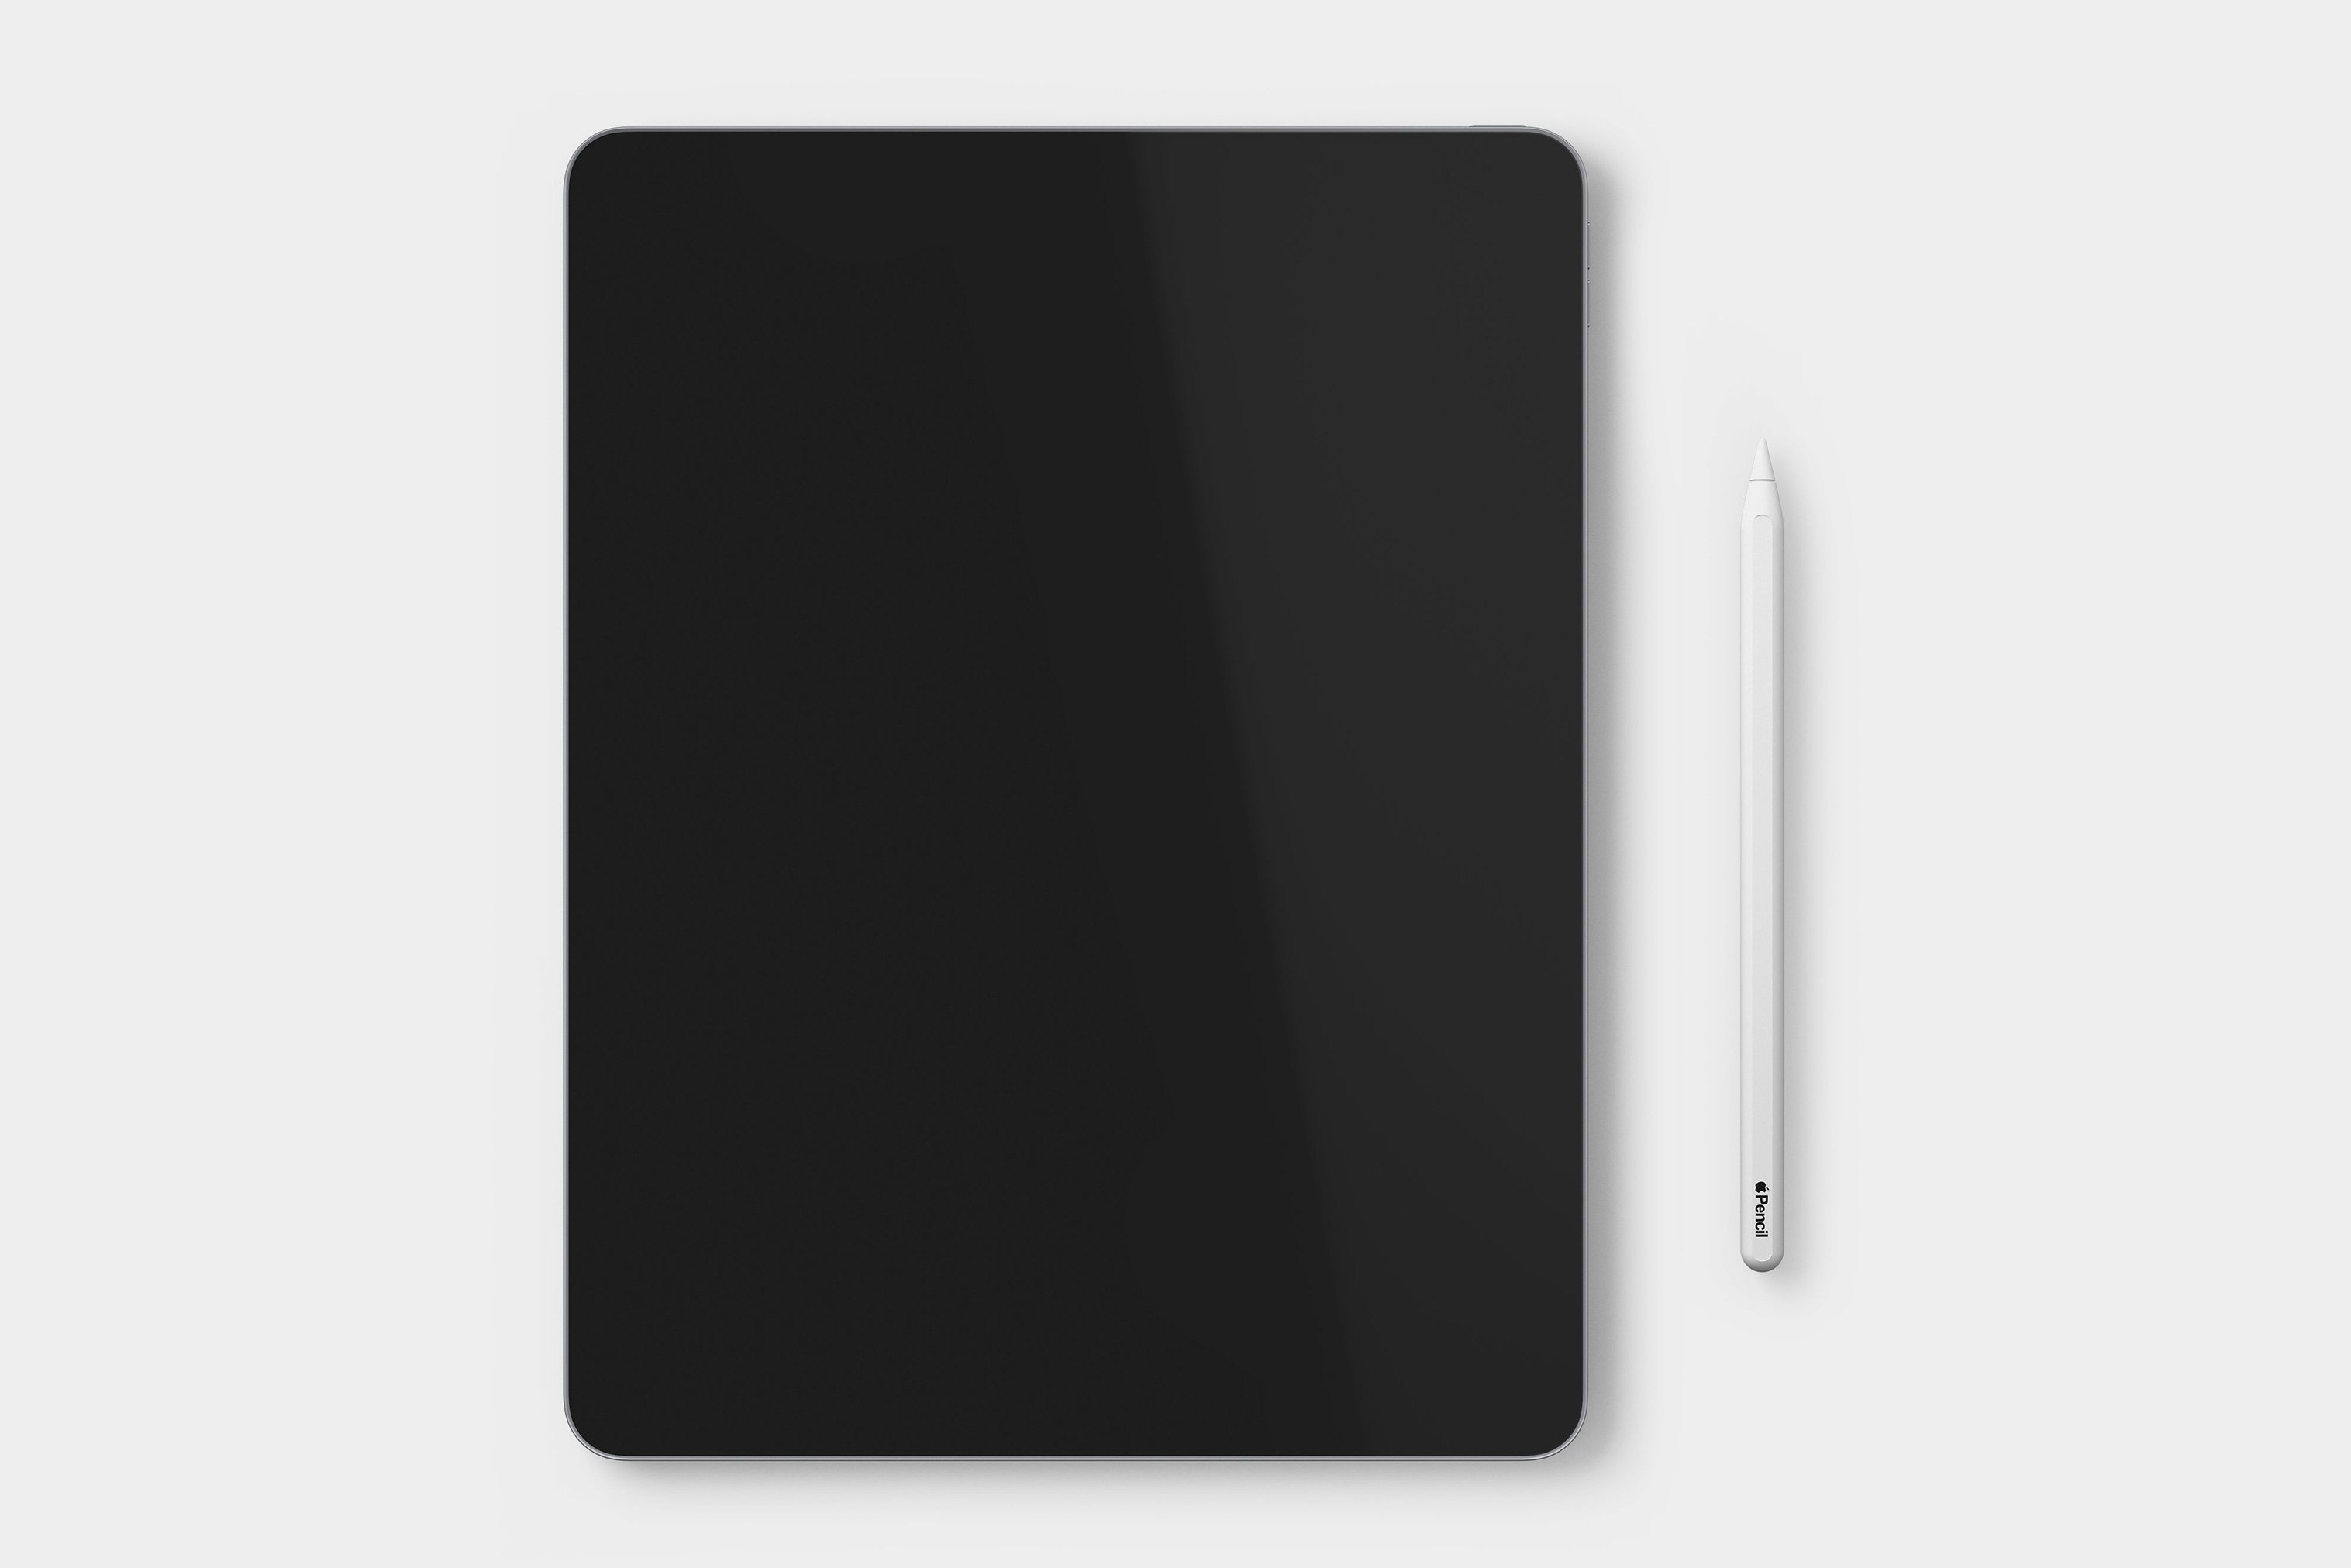 iPad Pro Mockup #1 preview image.